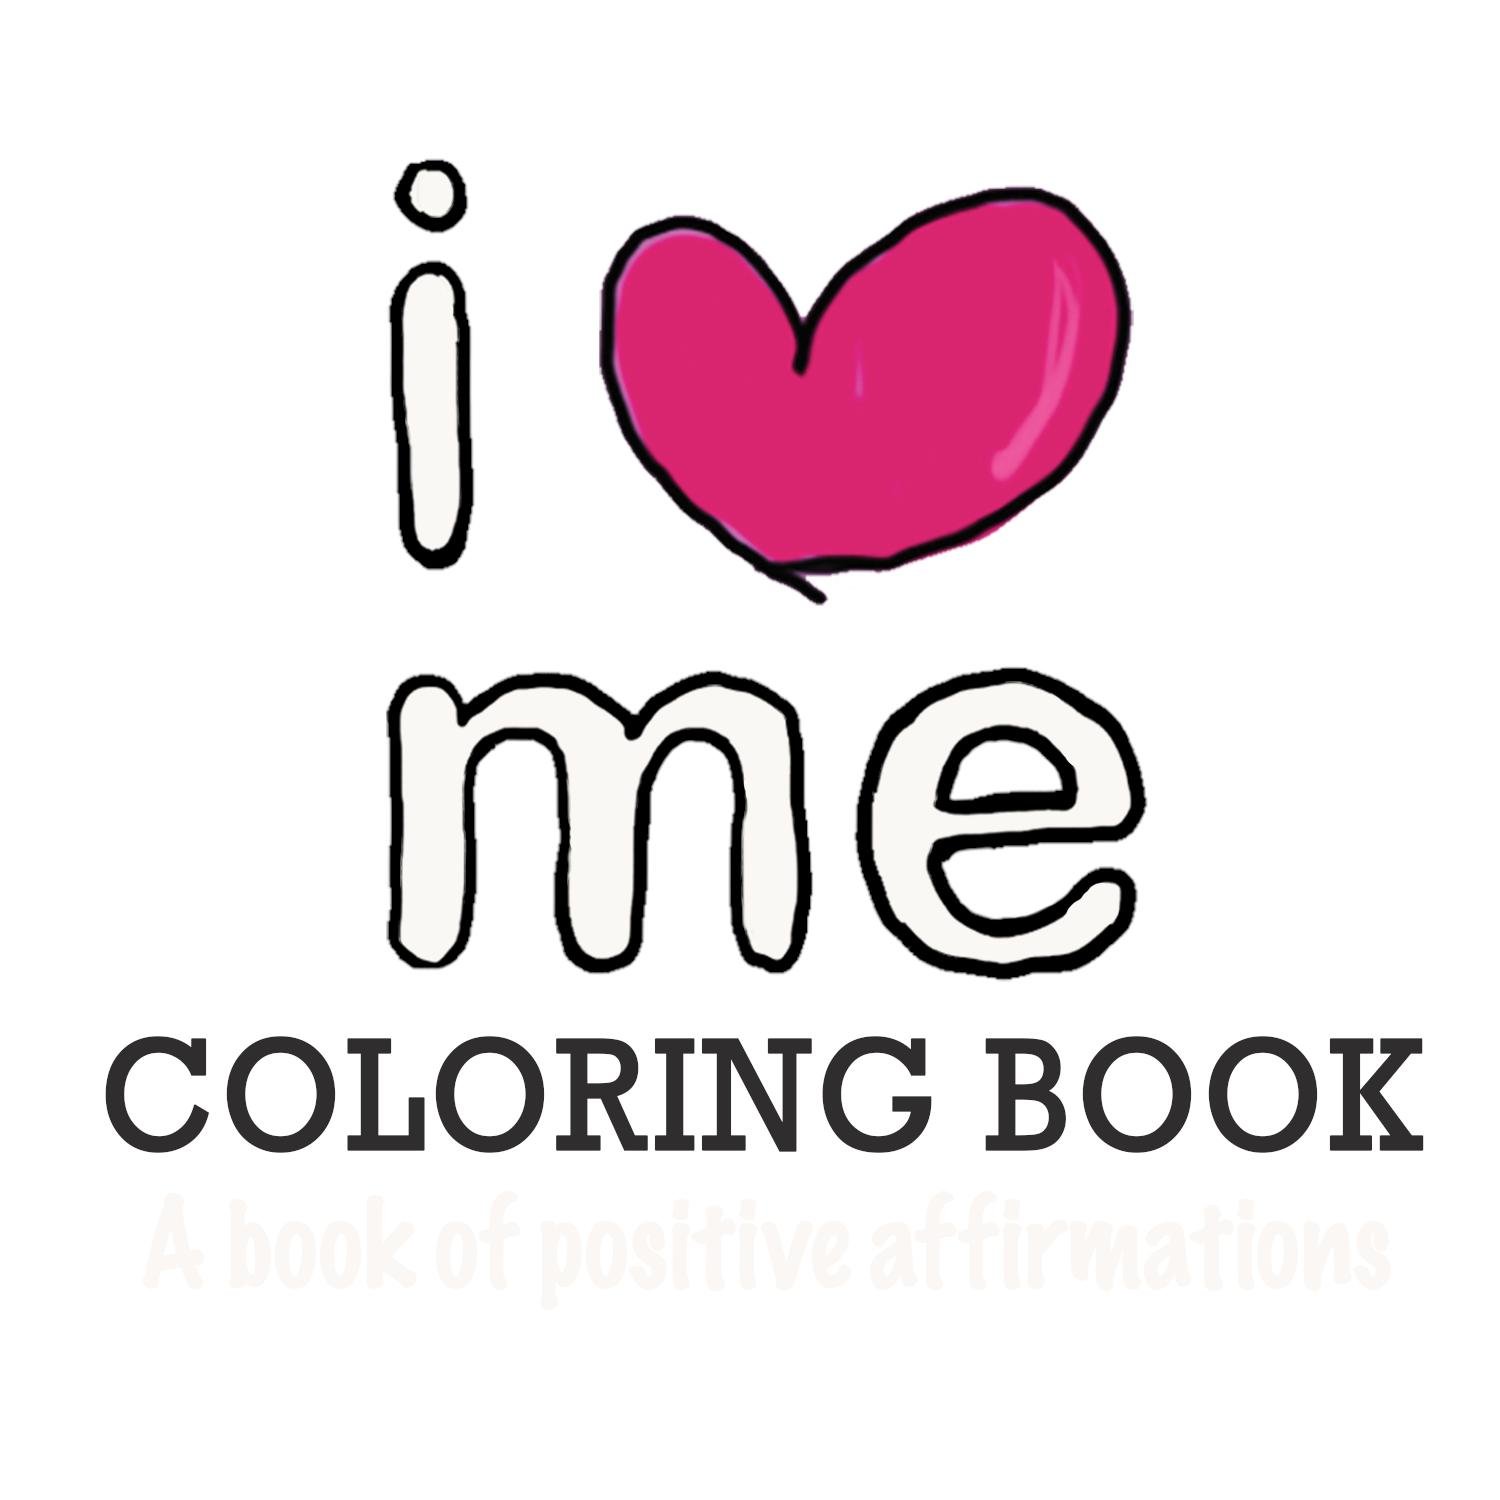 A coloring book of positive affirmations for girls full of color.  https://t.co/QjUgpFb39V